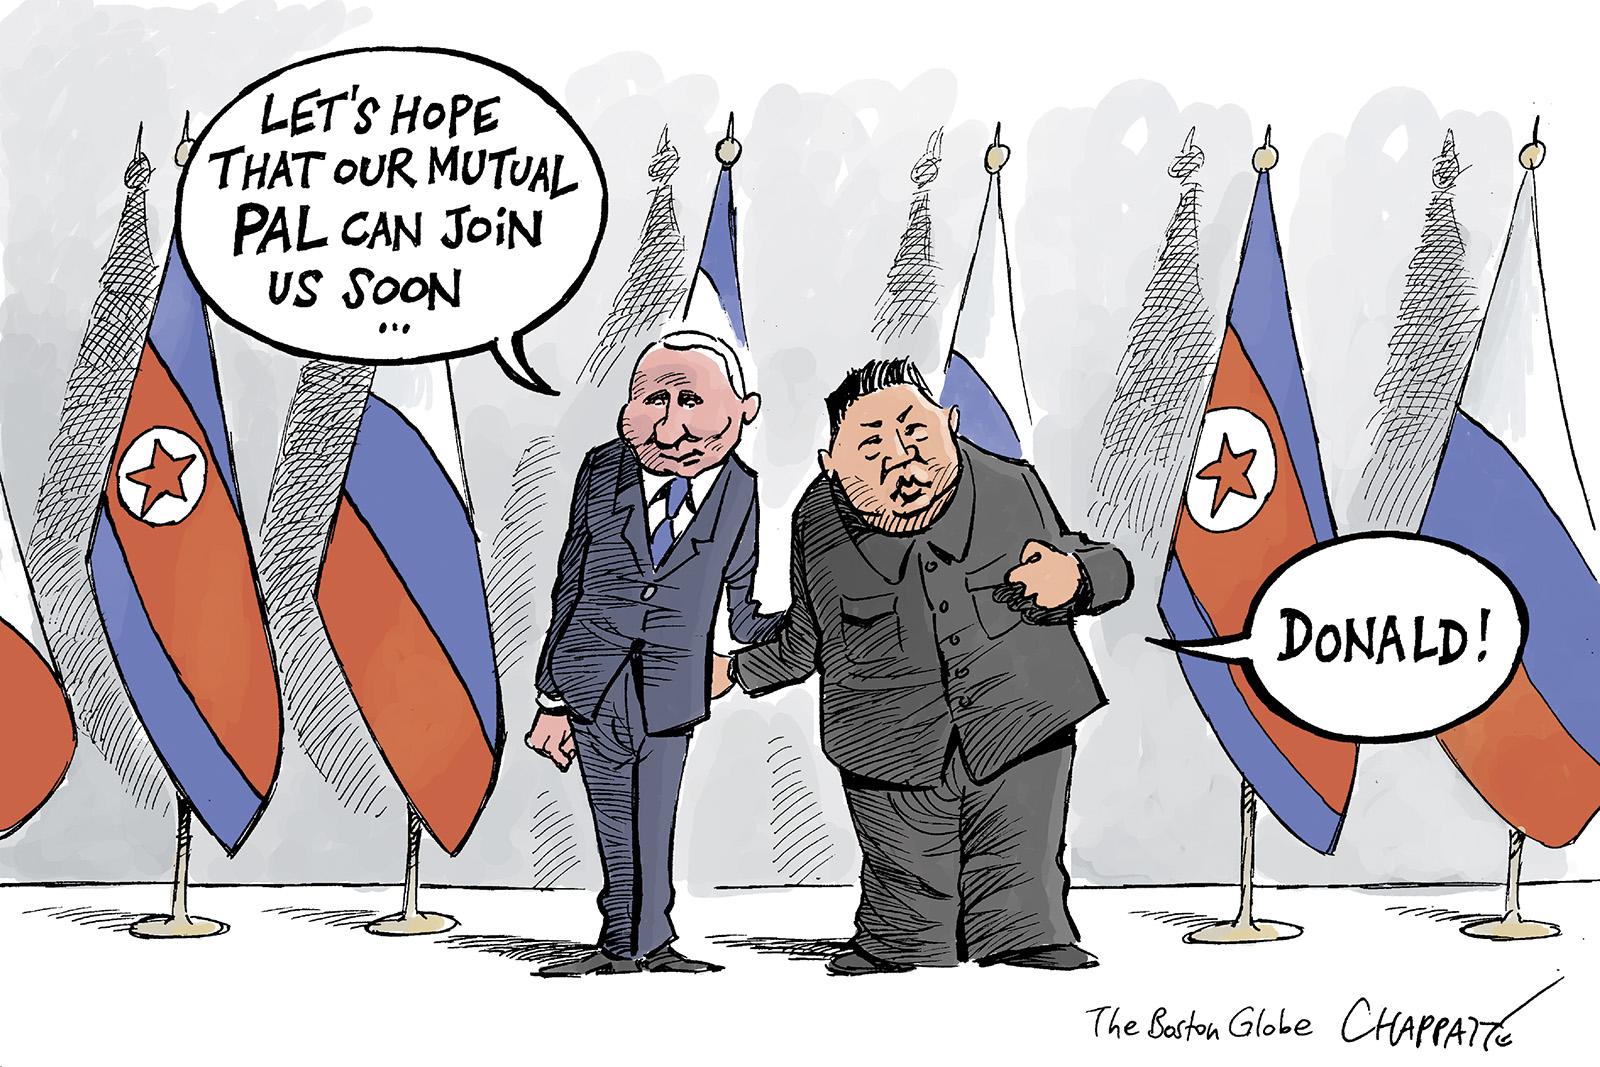 When Putin and Kim meet